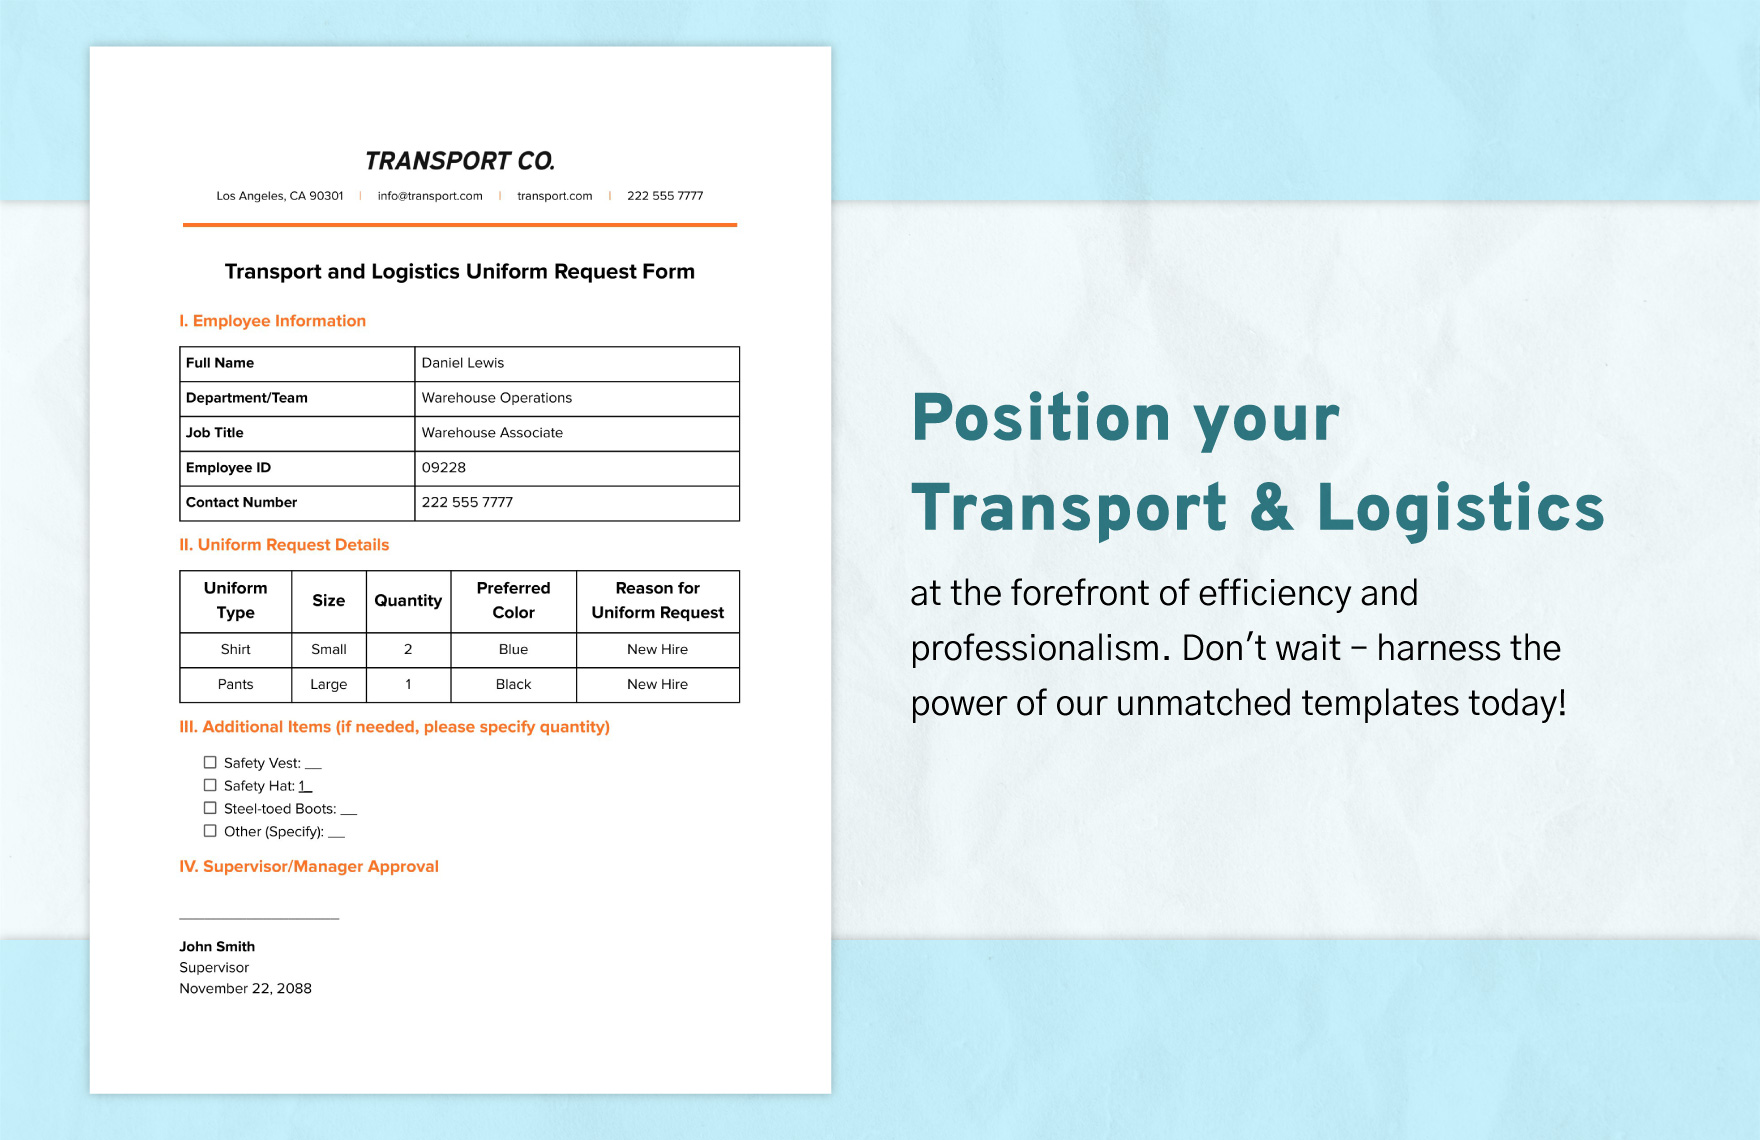 Transport and Logistics Uniform Request Form Template